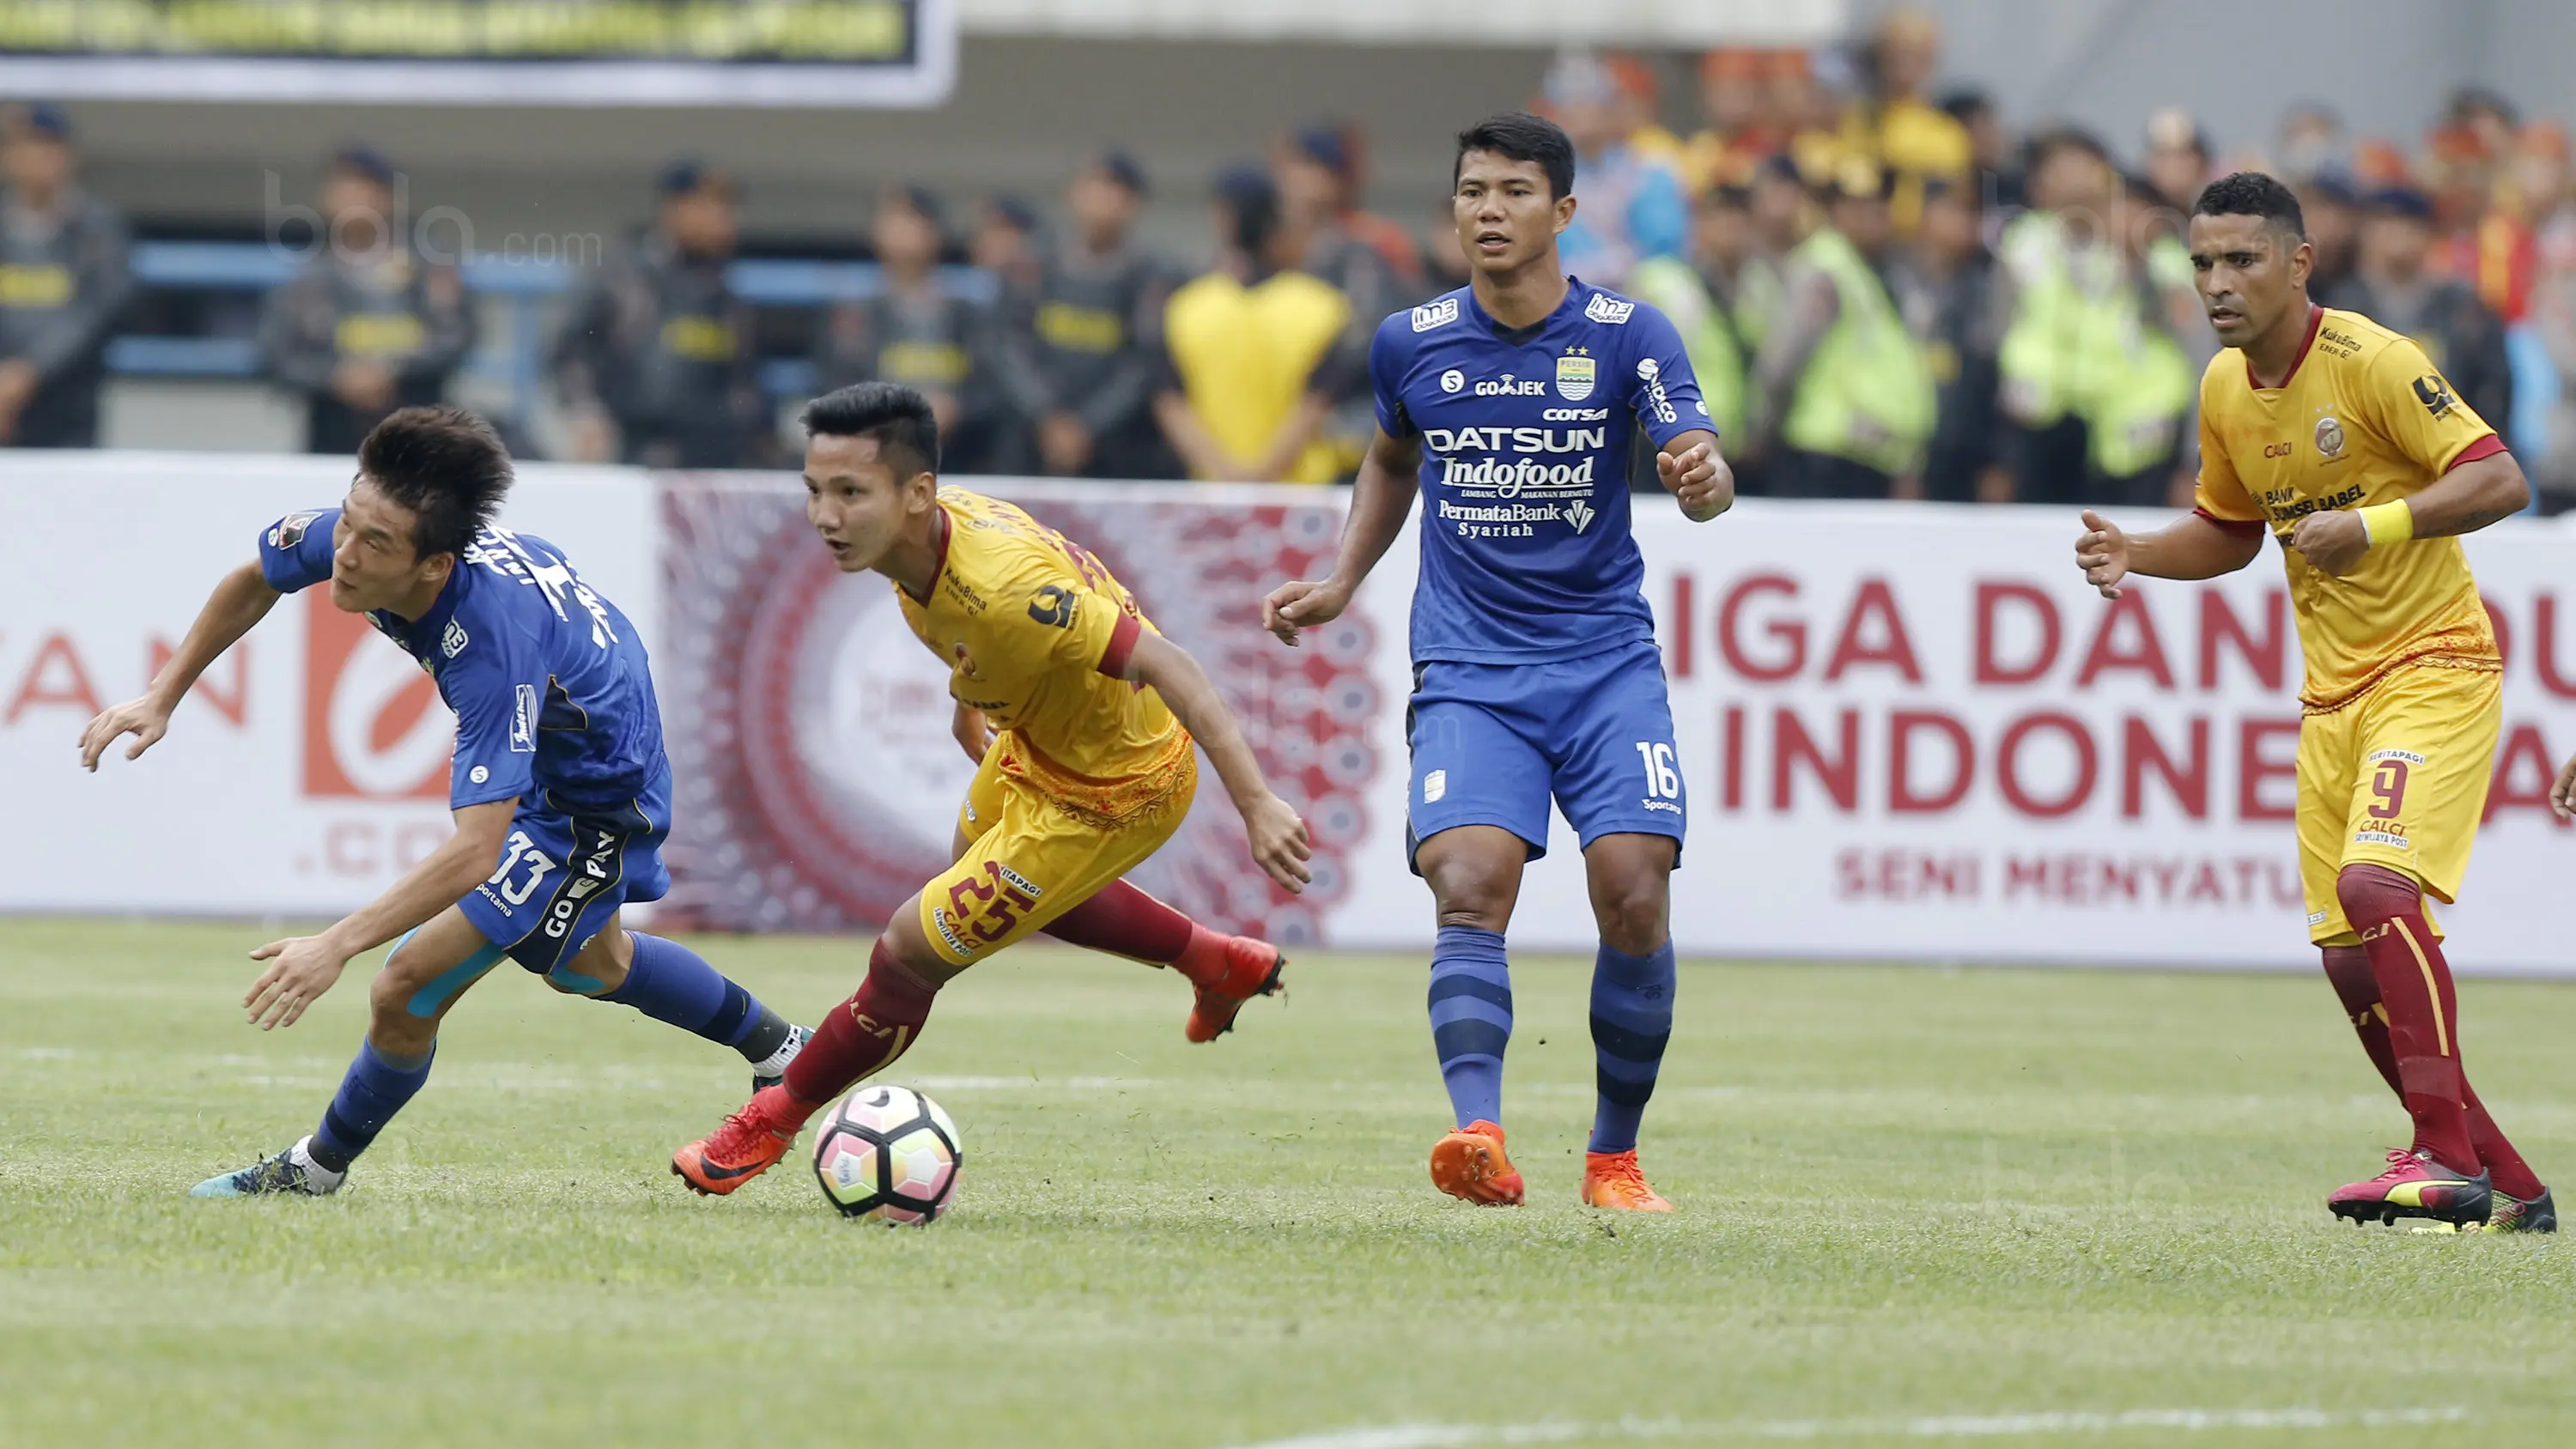 Gelandang Sriwijaya FC, Syahrin Abimanyu, berebut bola dengan gelandang Persib Bandung, Oh In-Kyun, pada laga Piala Presiden di Stadion GBLA, Bandung, Selasa (16/1/2018). (Bola.com/M Iqbal Ichsan)